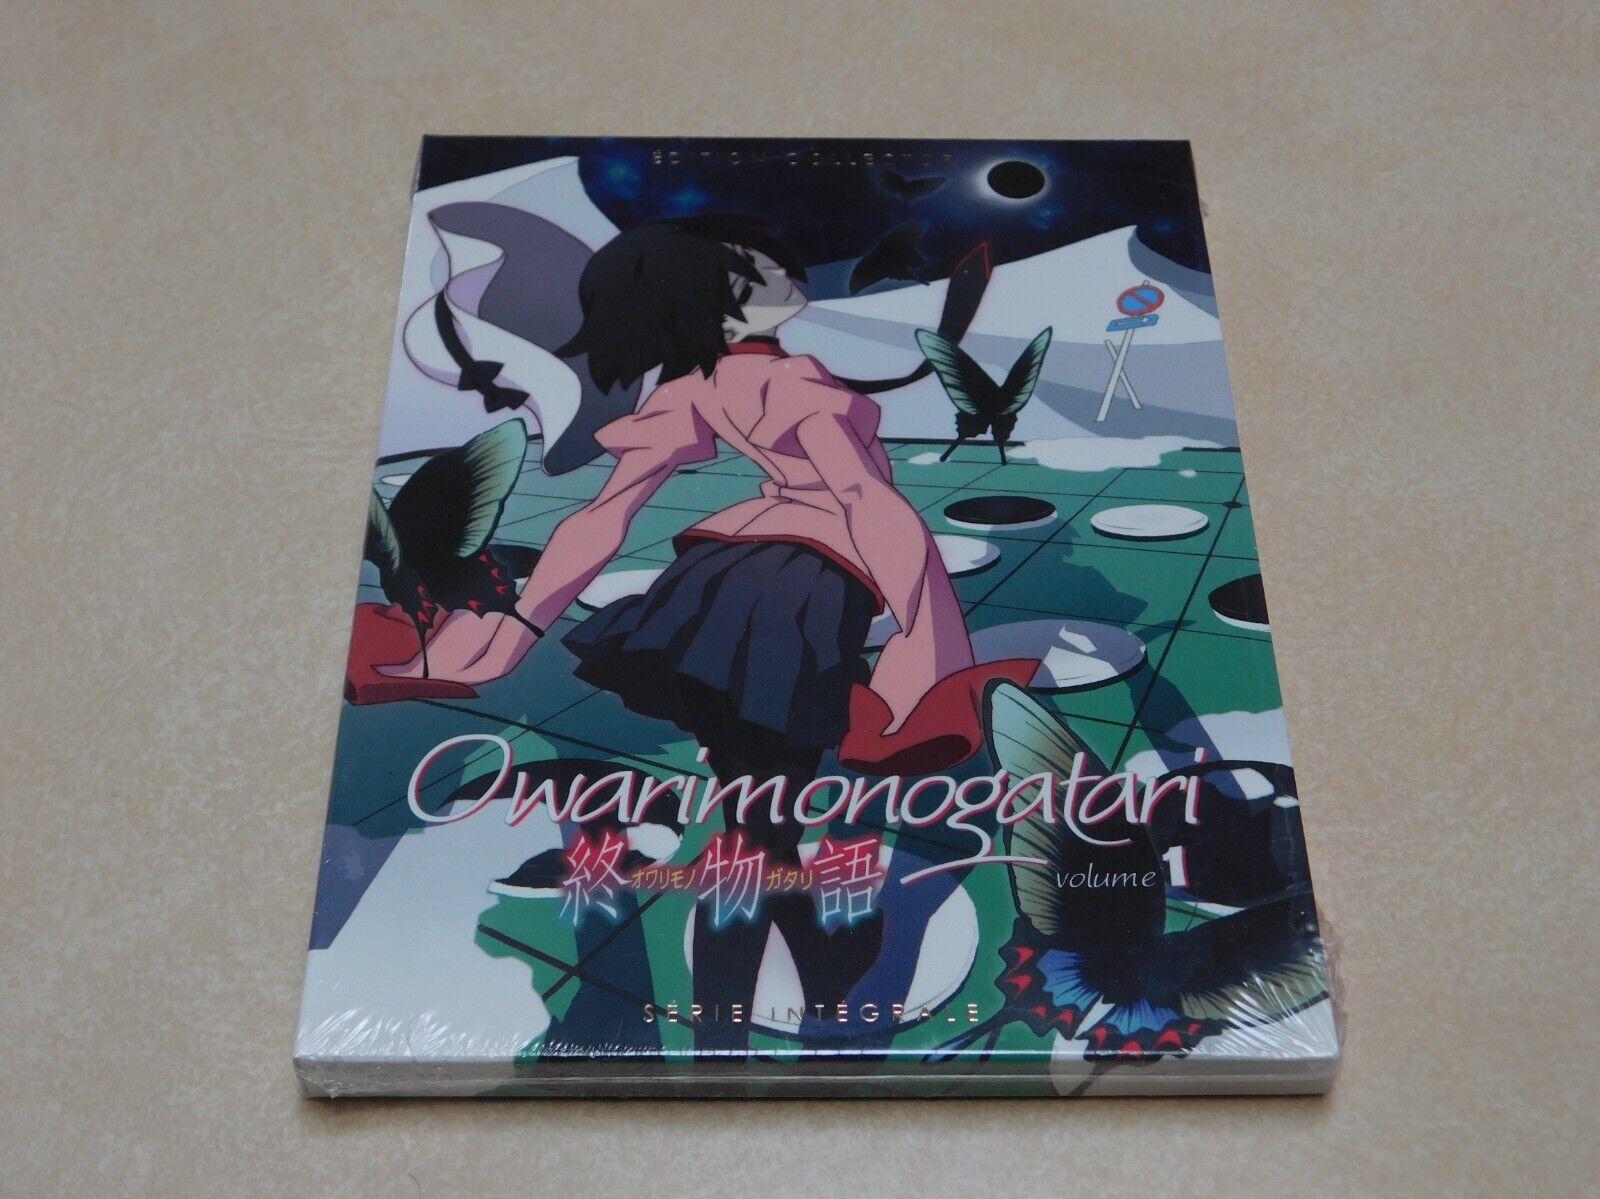 Owarimonogatari Plete Volume Collection Anime Blu Ray Dvd